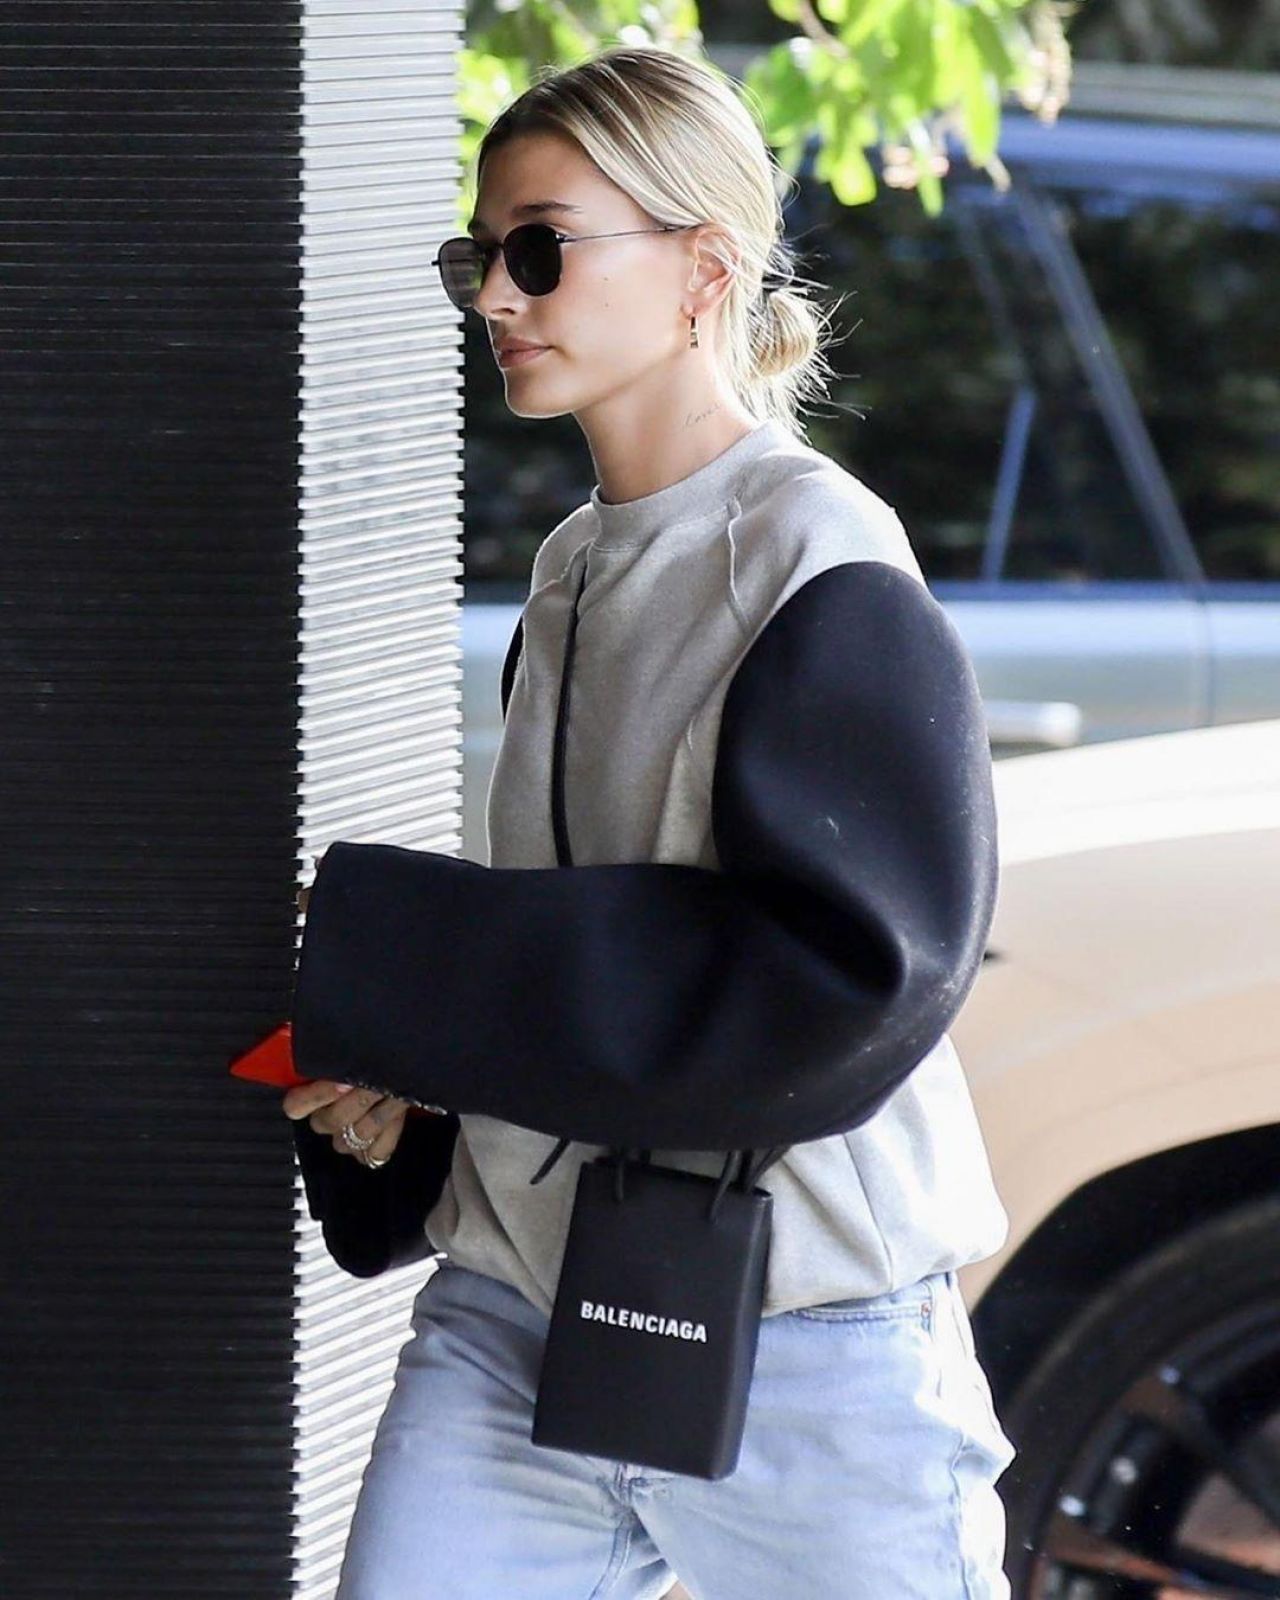 Balenciaga Phone Holder Bag worn by Hailey Bieber Honor Bar January 9